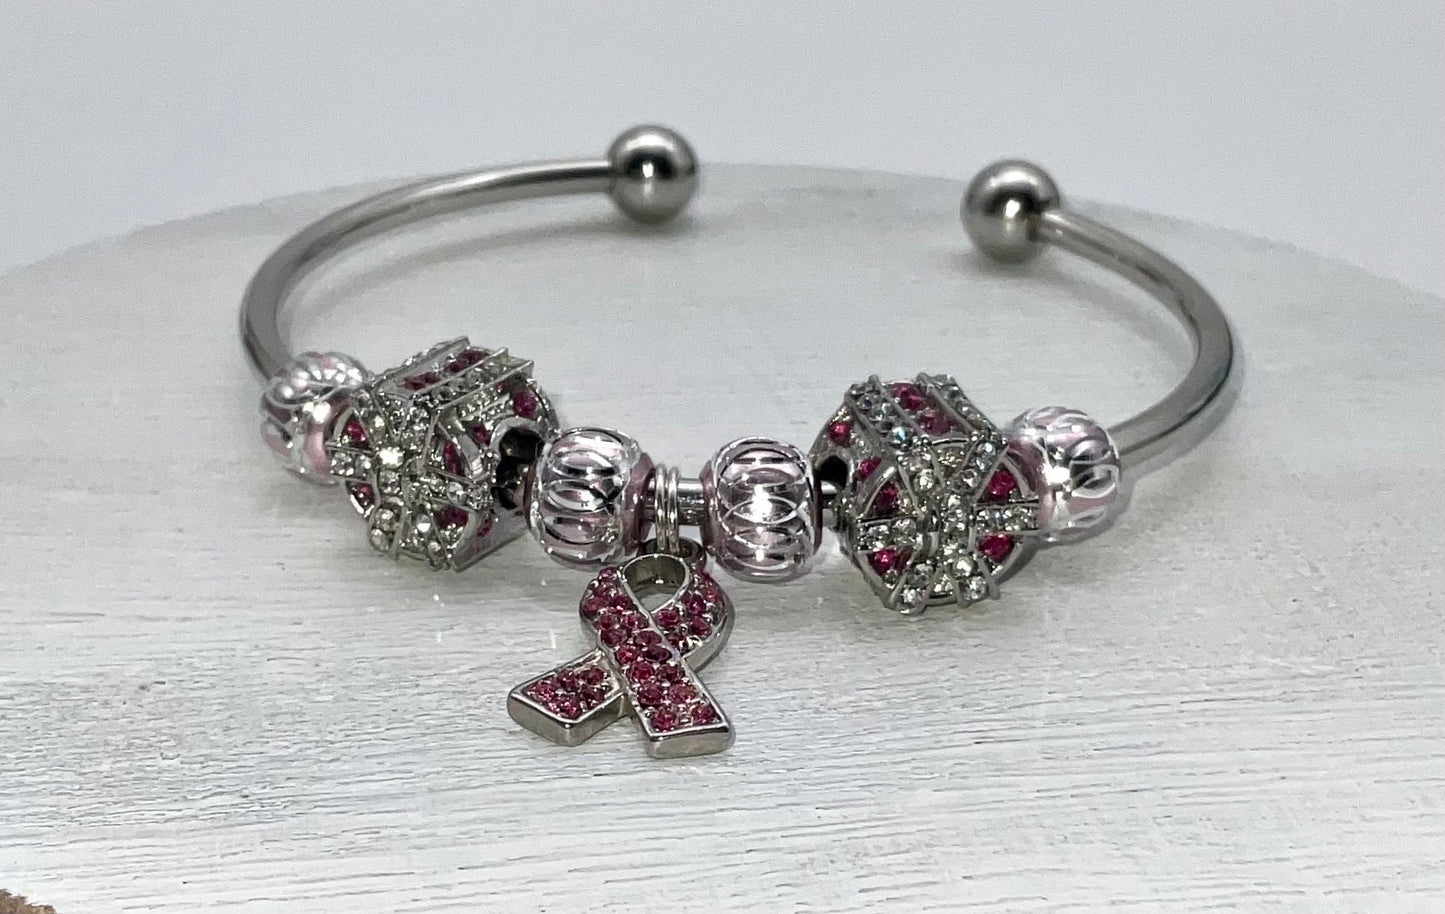 Breast Cancer Awareness and Survivor Crystal Pink Ribbon Silver Charm Bracelet